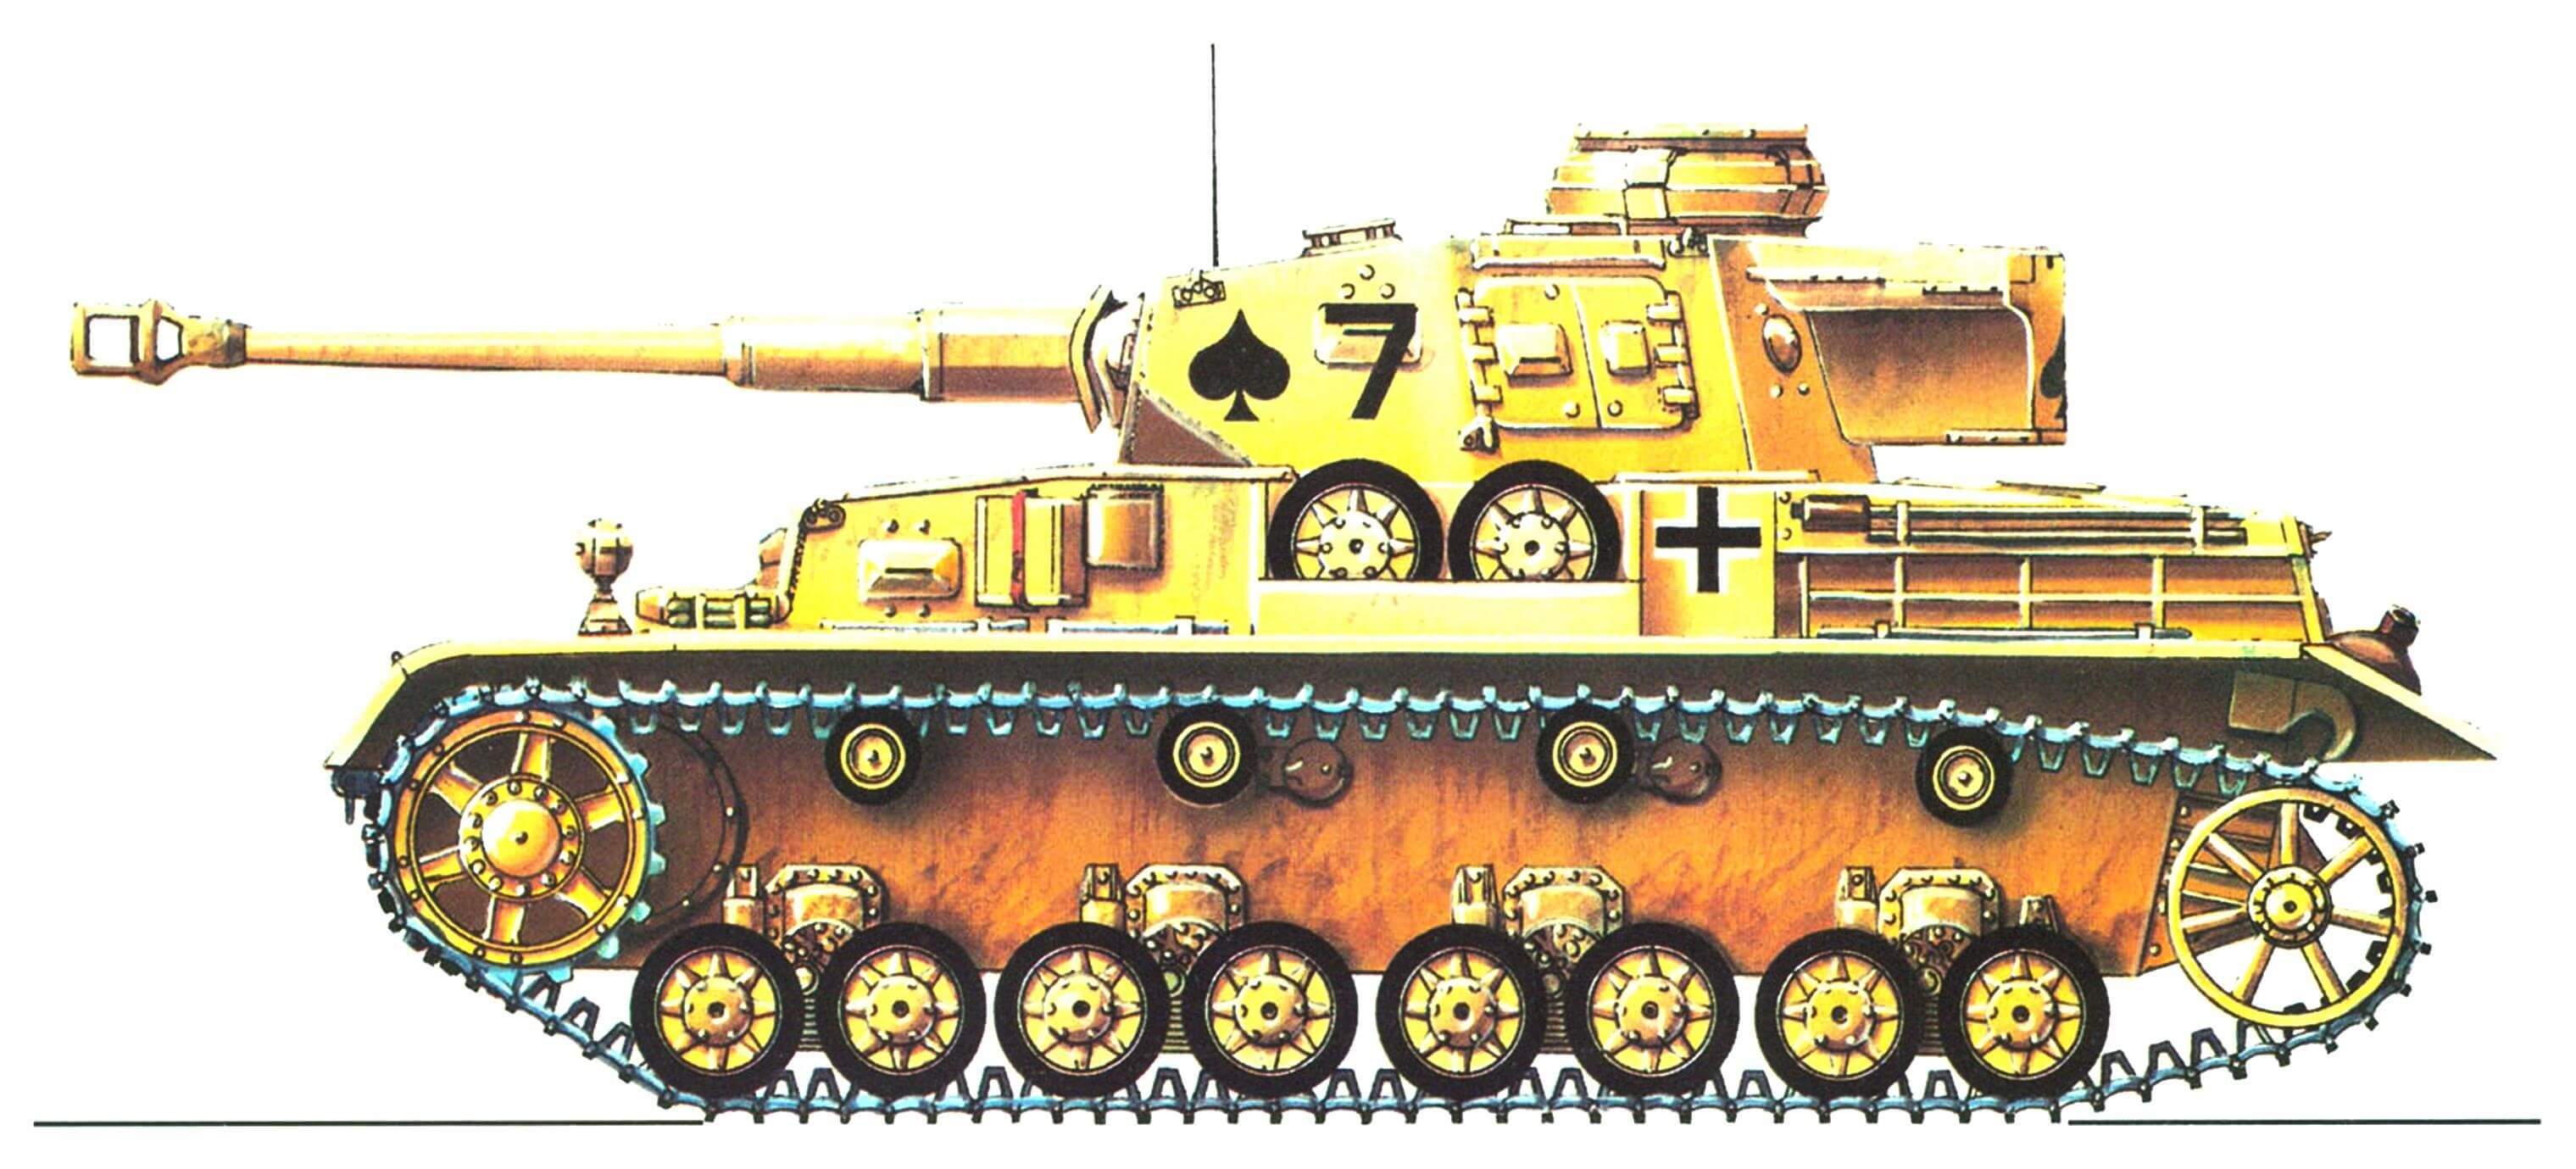 Pz.Kpfw.IV Ausf.G. 15-я танковая дивизия германского Африканского корпуса (15.Panzer Divizion Deutsche Afrika Korps), Тунис, 1943 год.